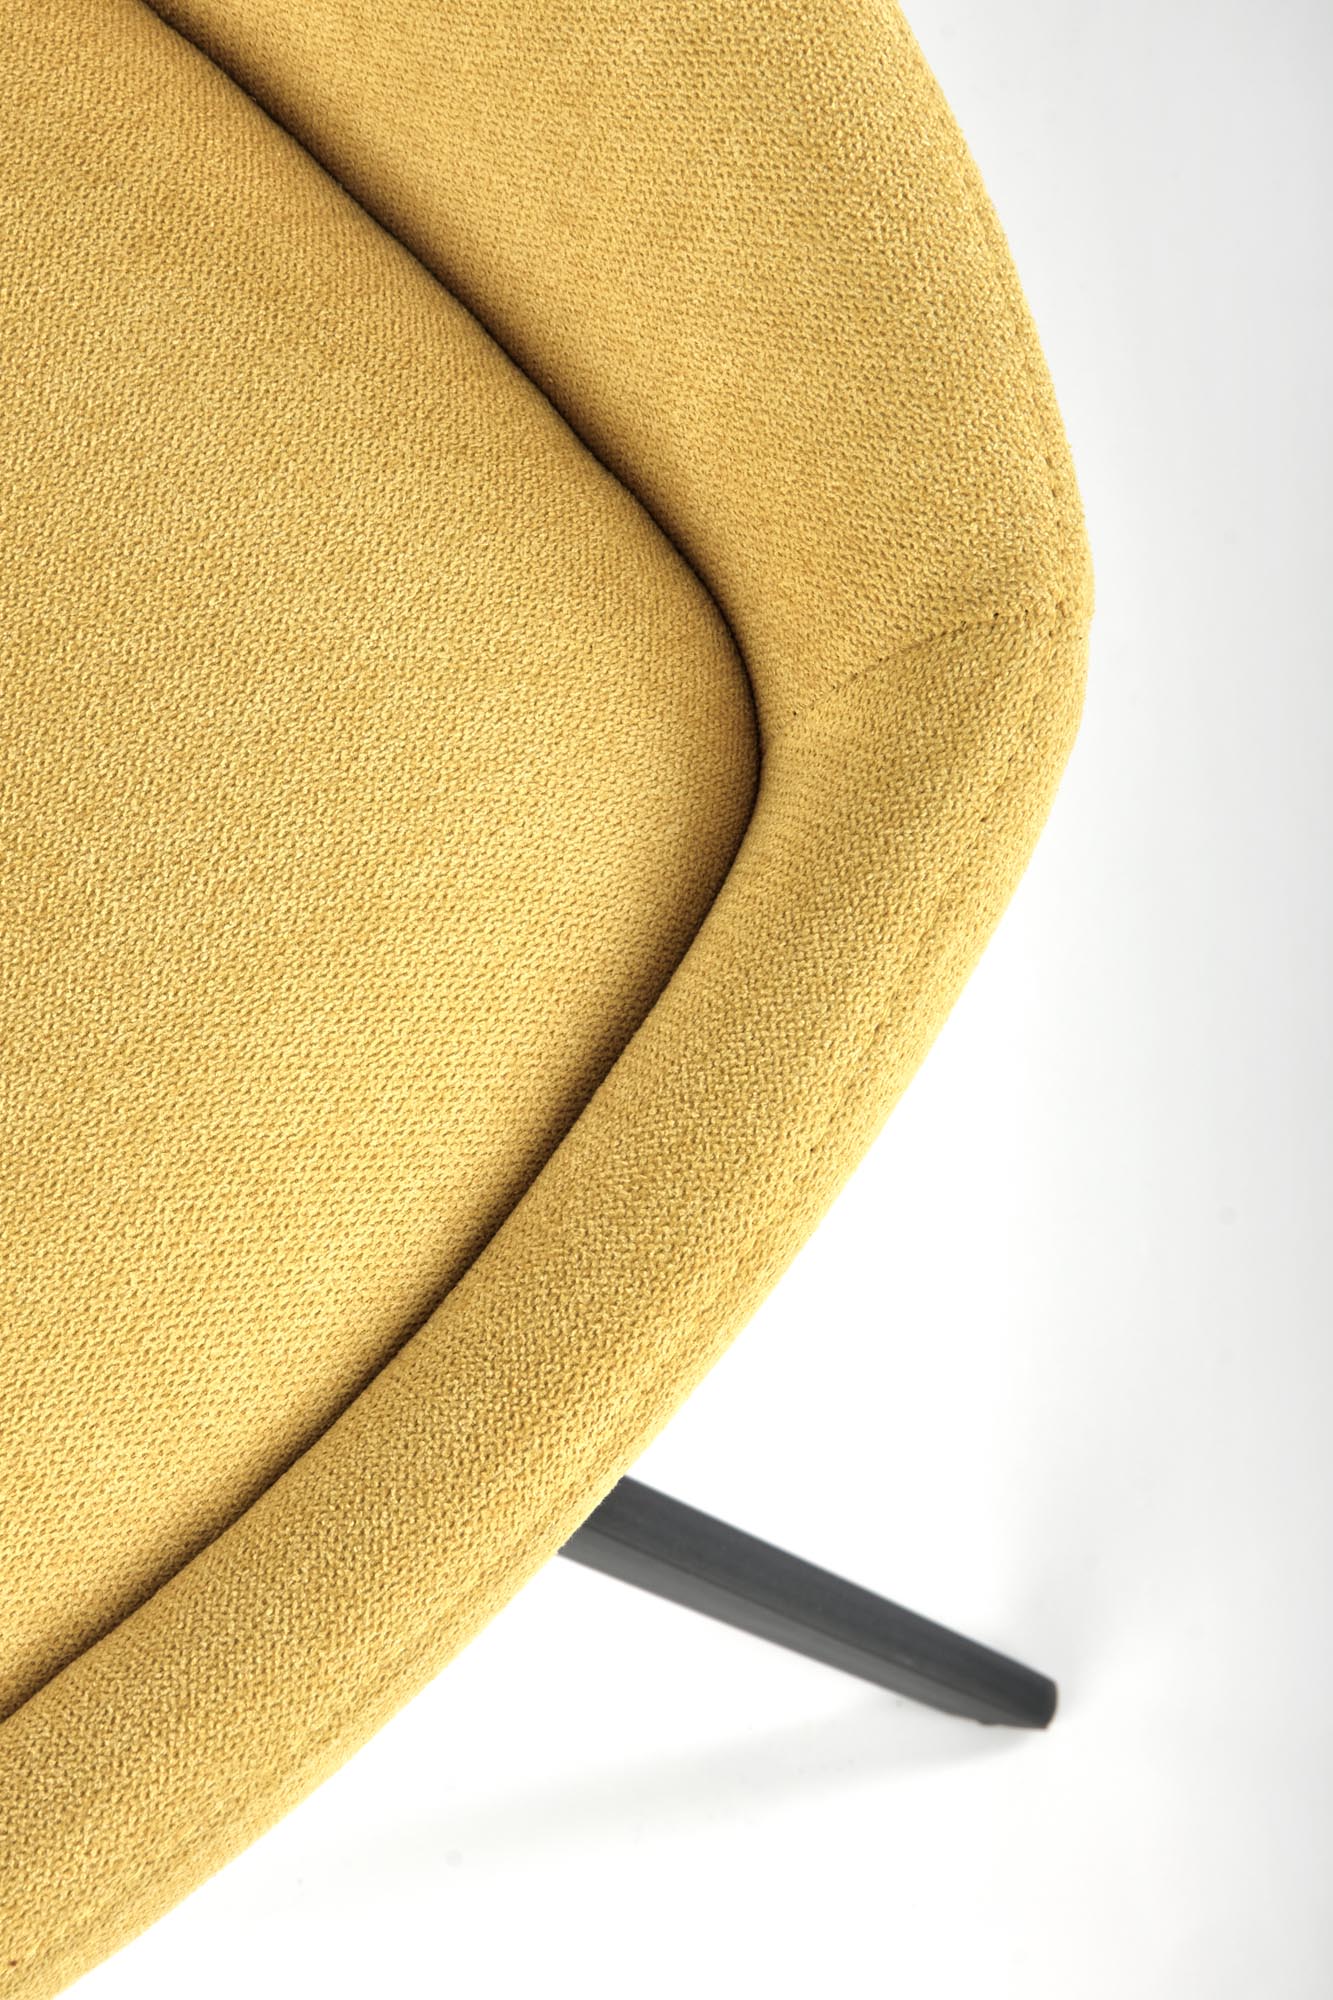 K431 stolica, boja: žuta